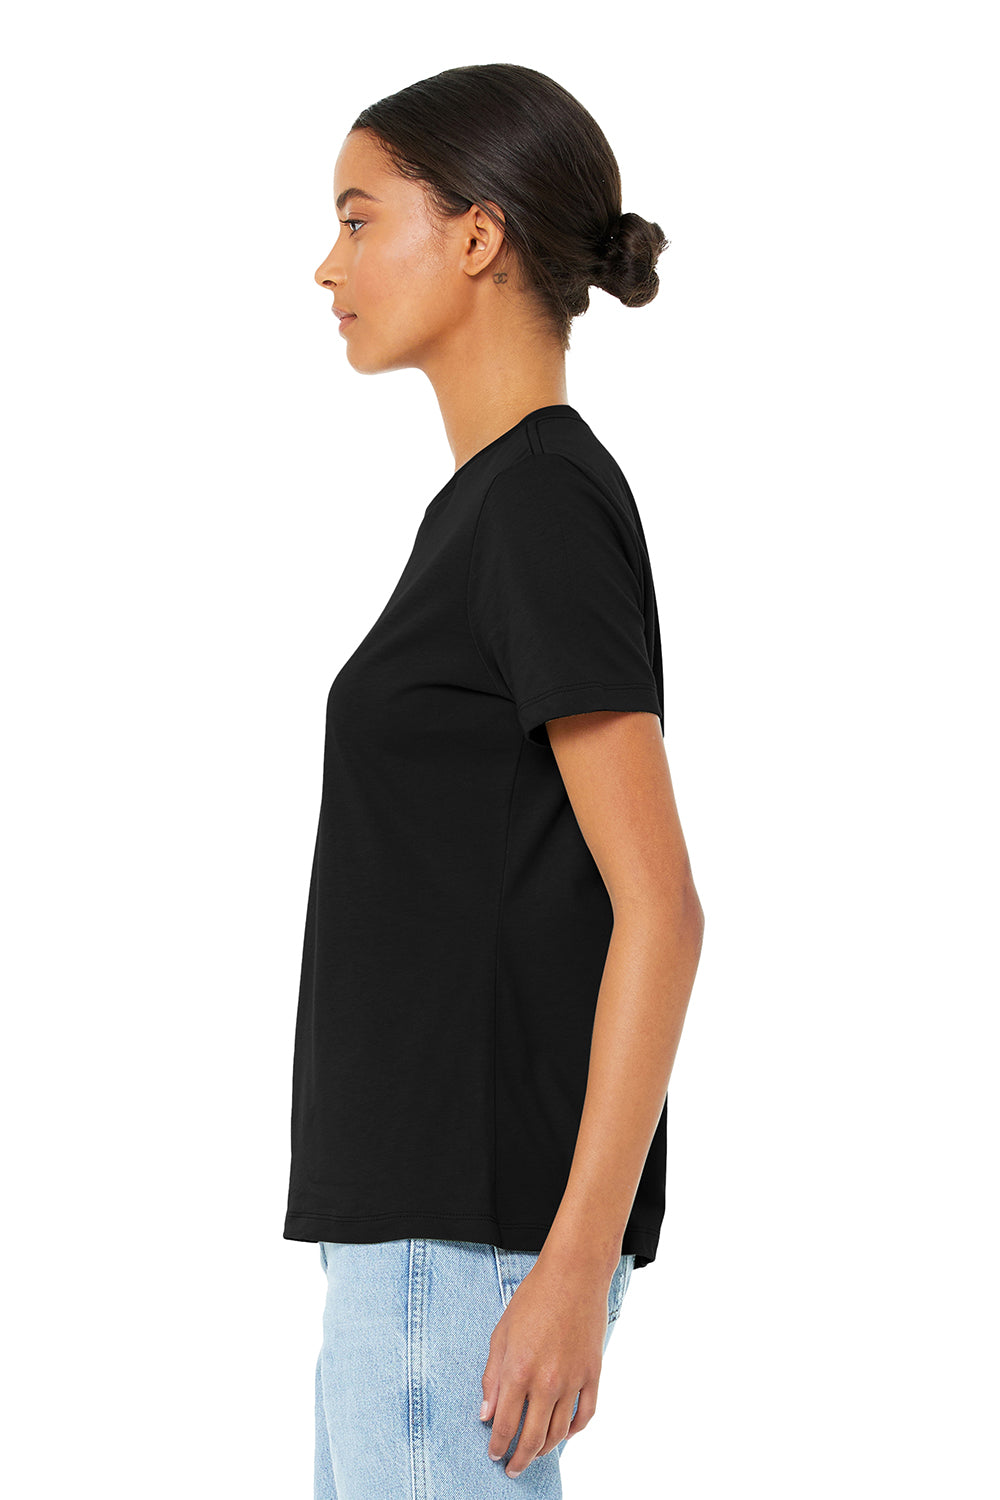 Bella + Canvas BC6400/B6400/6400 Womens Relaxed Jersey Short Sleeve Crewneck T-Shirt Black Model Side